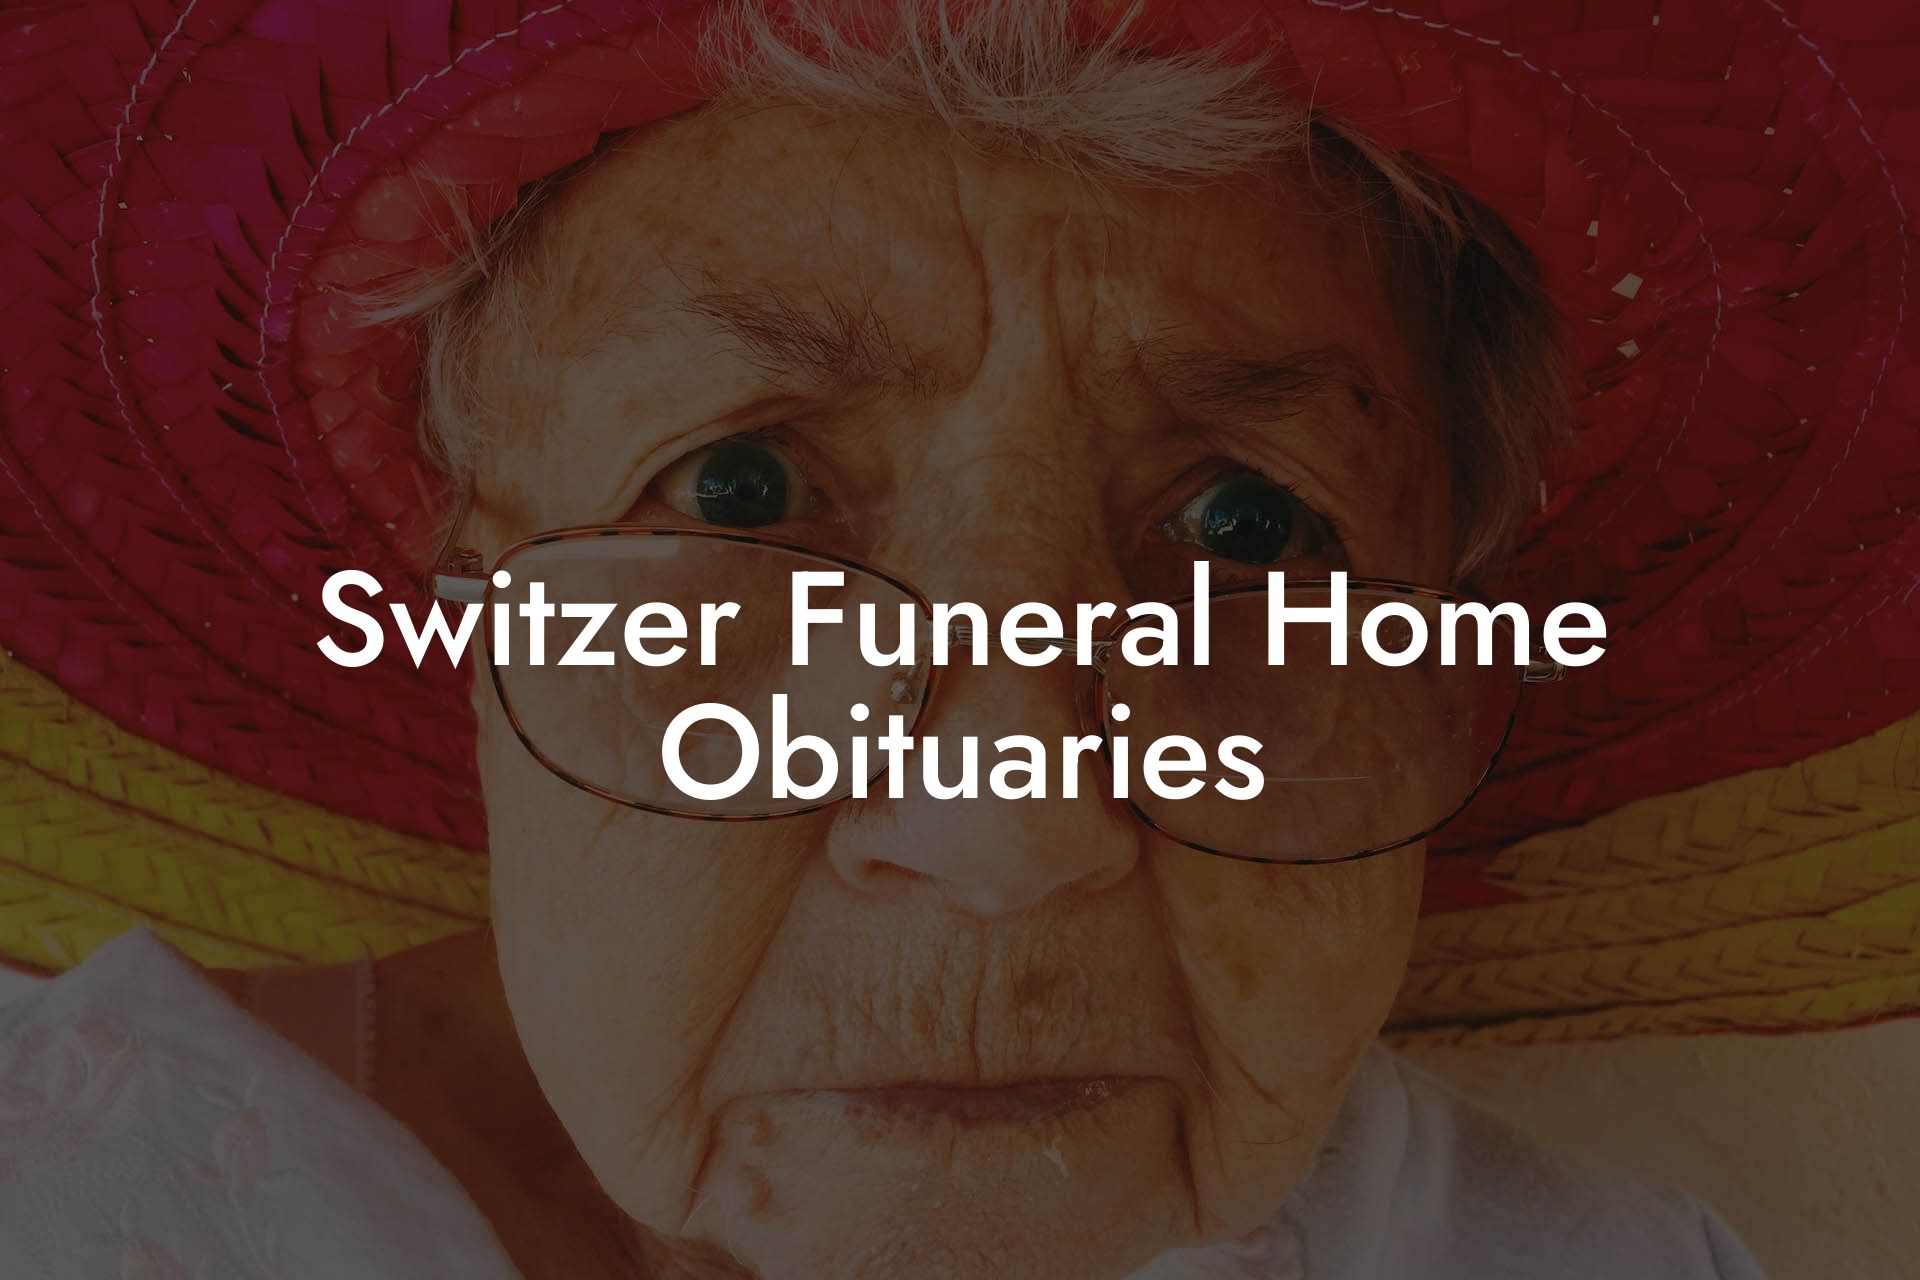 Switzer Funeral Home Obituaries